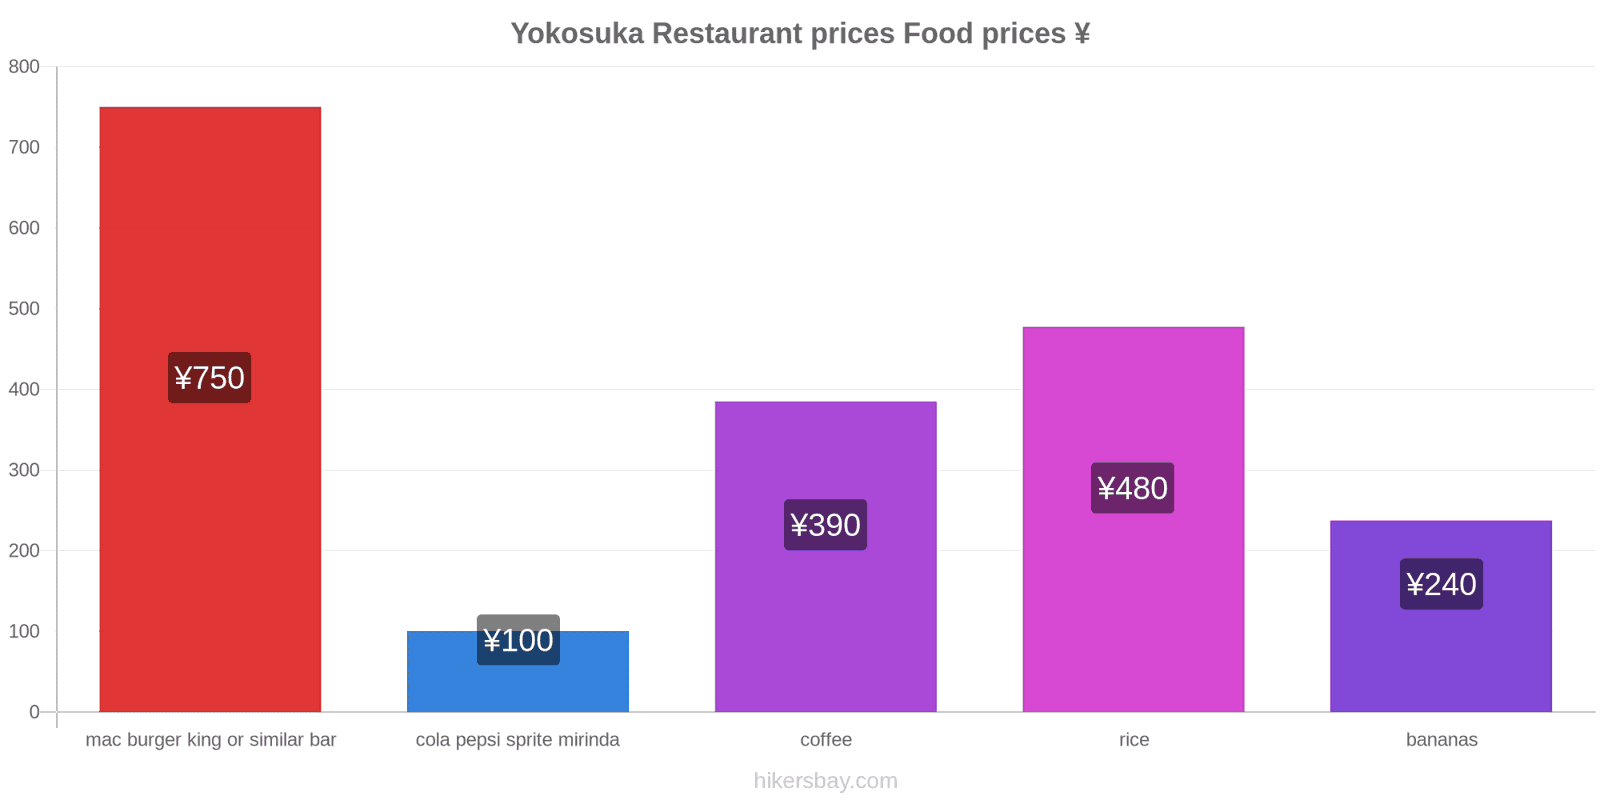 Yokosuka price changes hikersbay.com